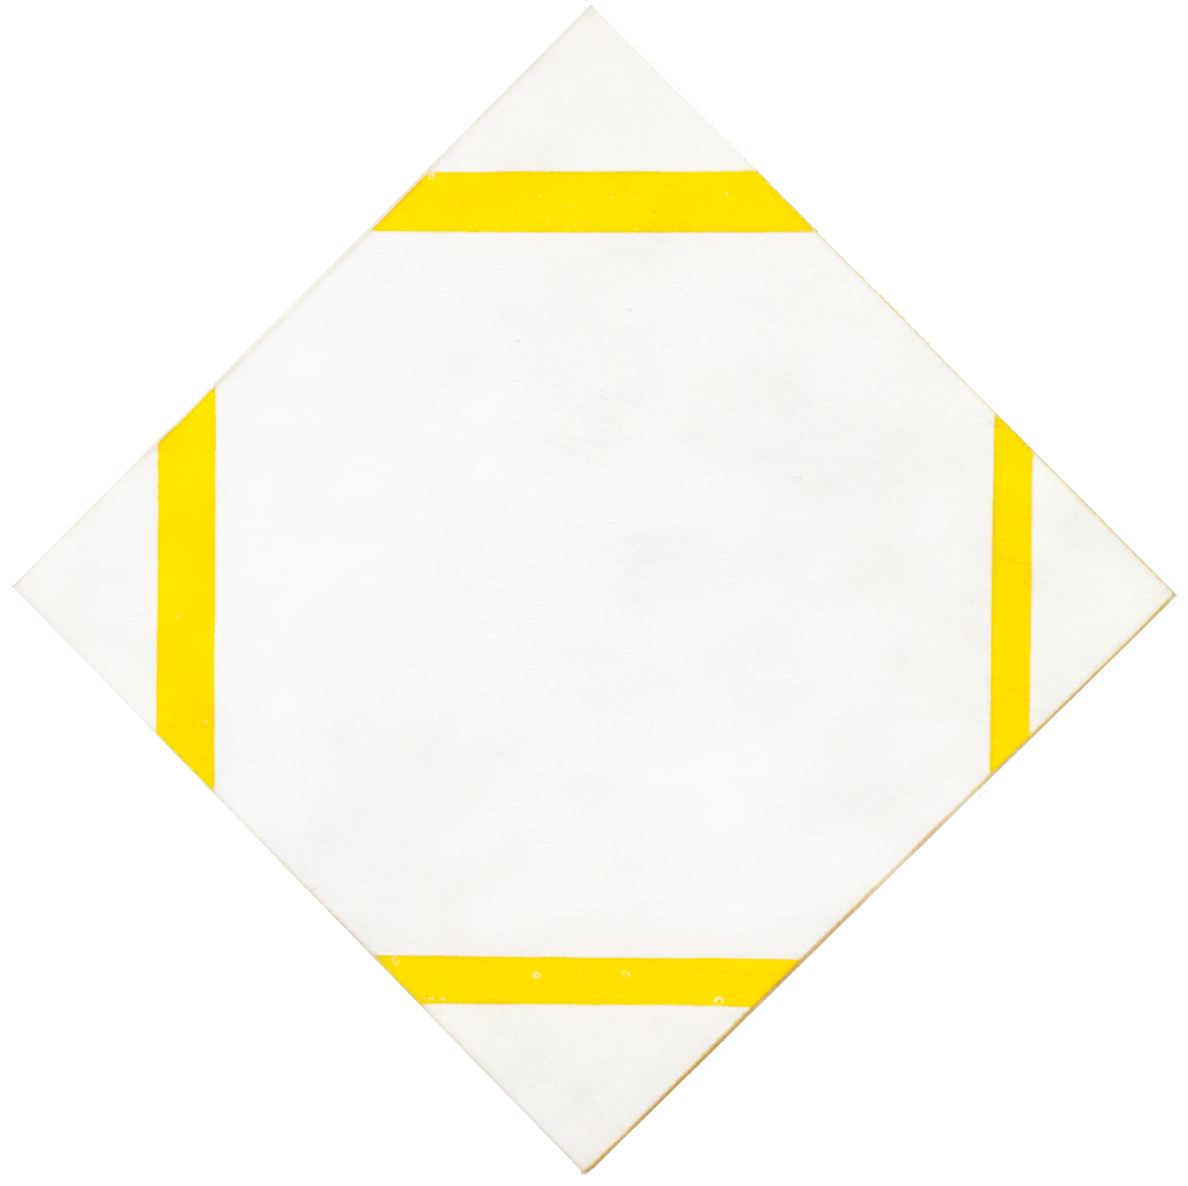 Piet Mondrian, Neoplasticism, Lozenge with Yellow Lines, 1933